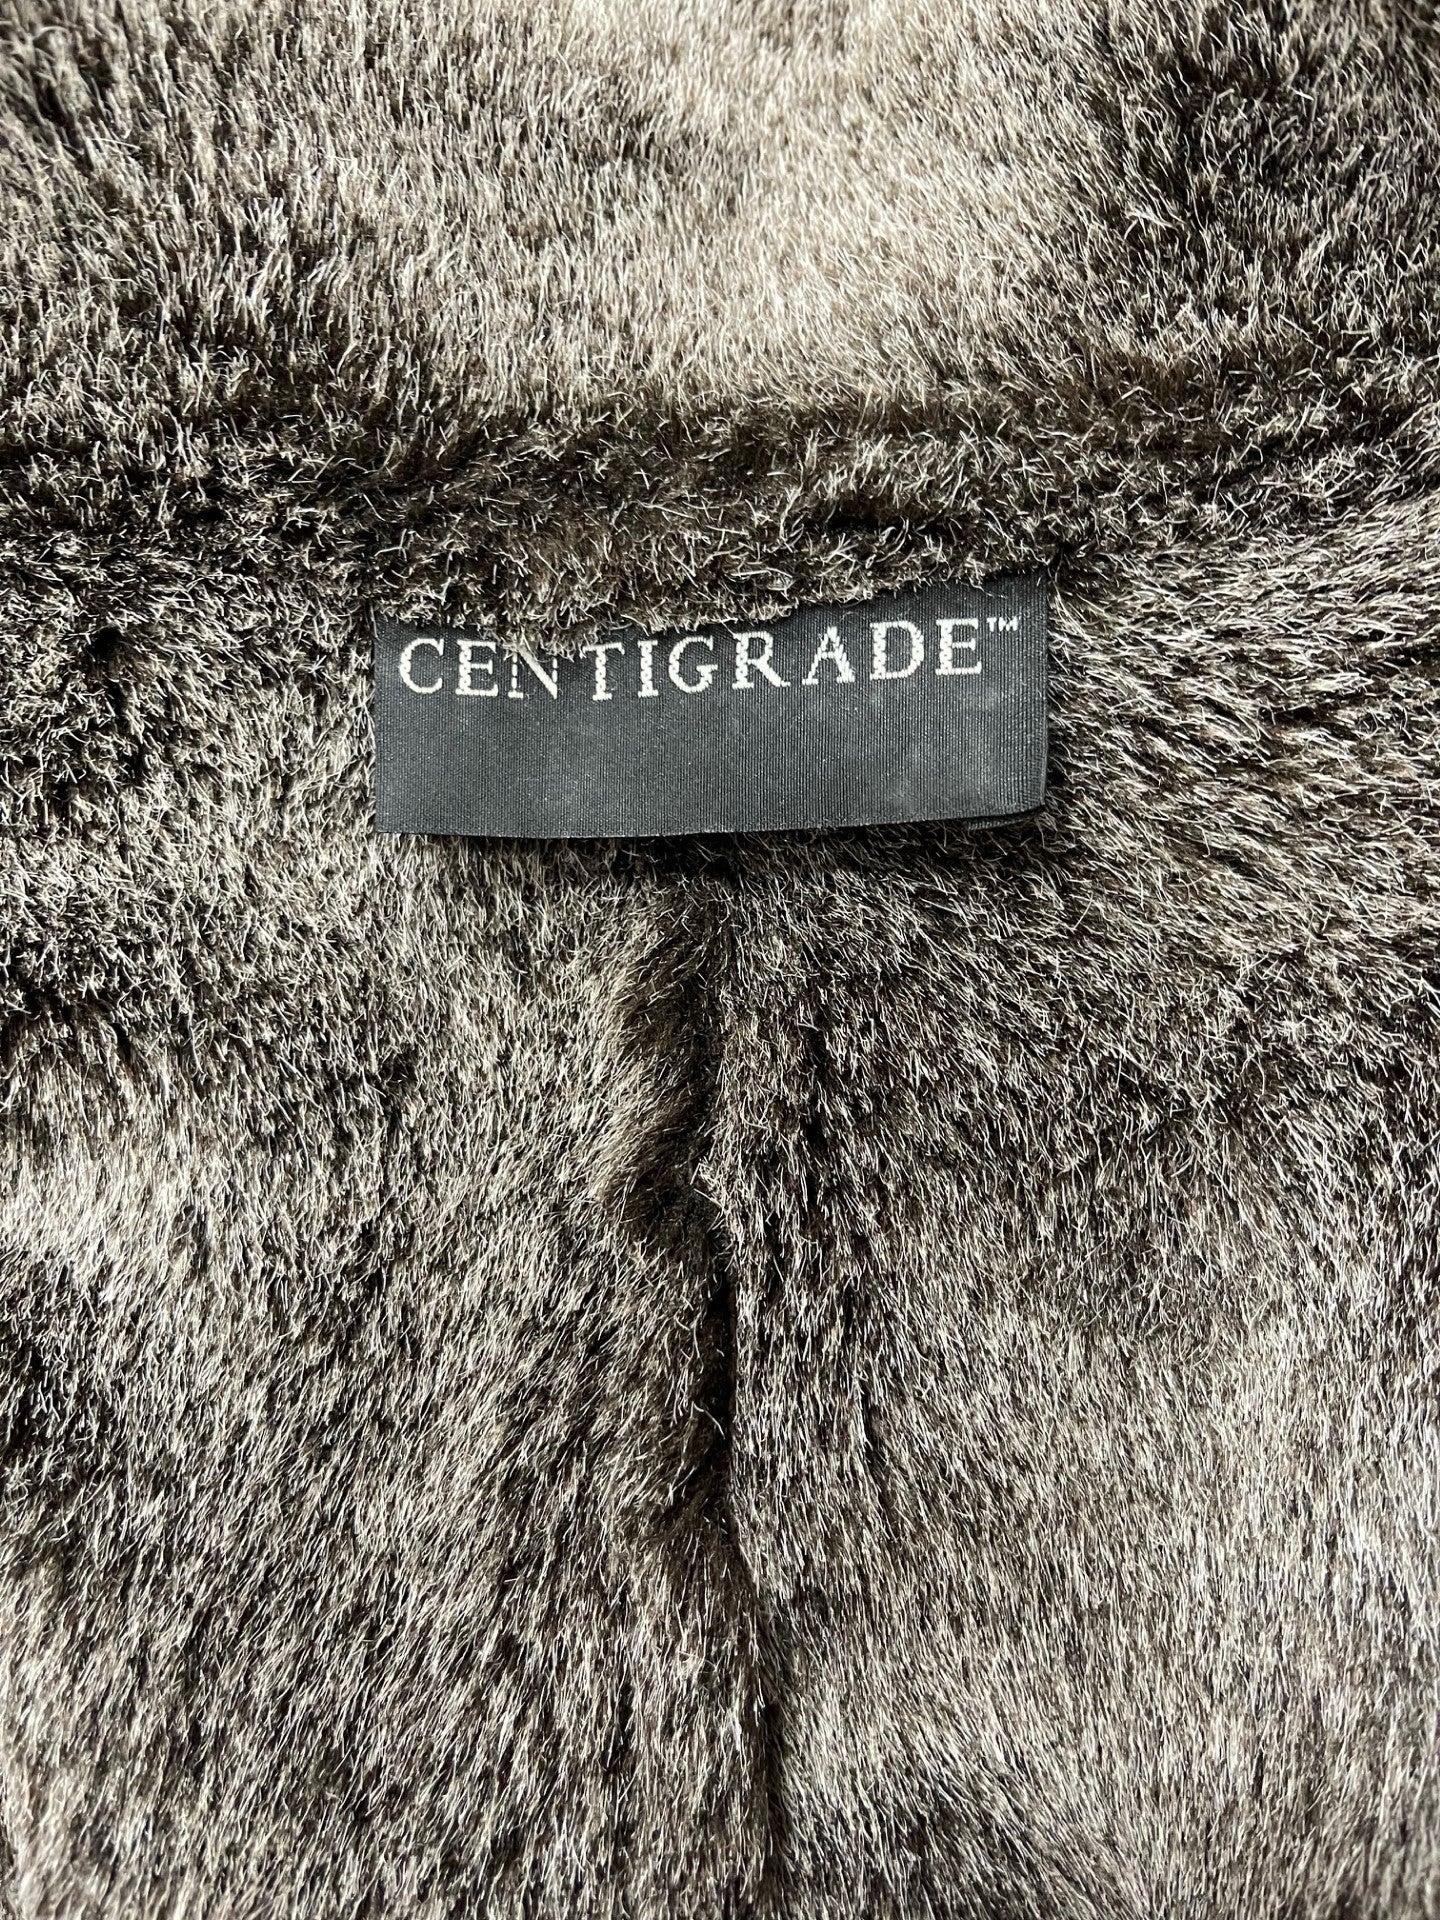 Centigrade Brown Faux Sheepskin and Fur Coat 2XL